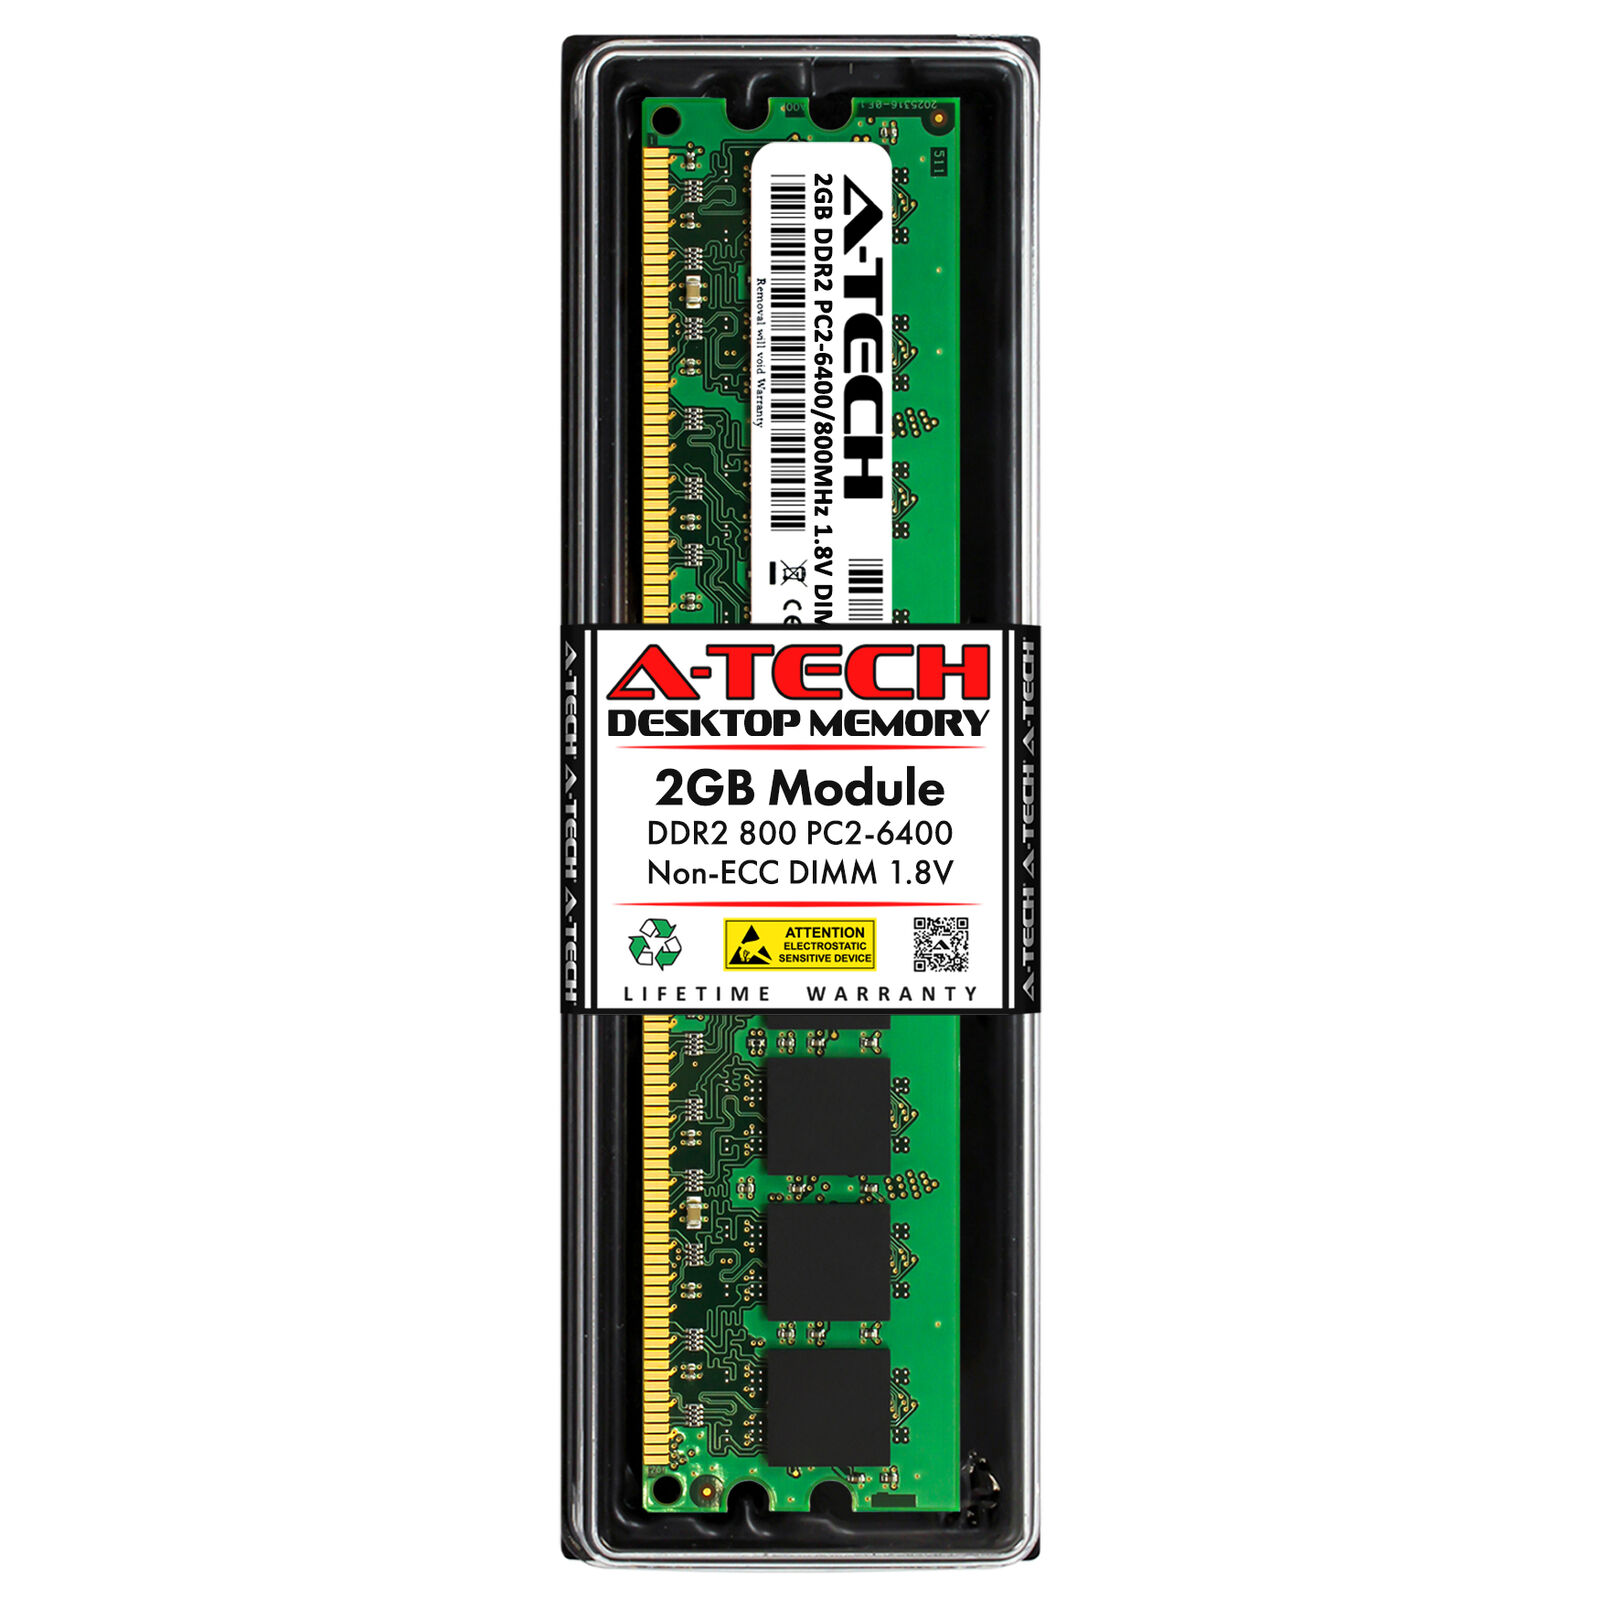 2GB DDR2-800 DIMM PNY 64B0QITHE-HS Equivalent Desktop Memory RAM